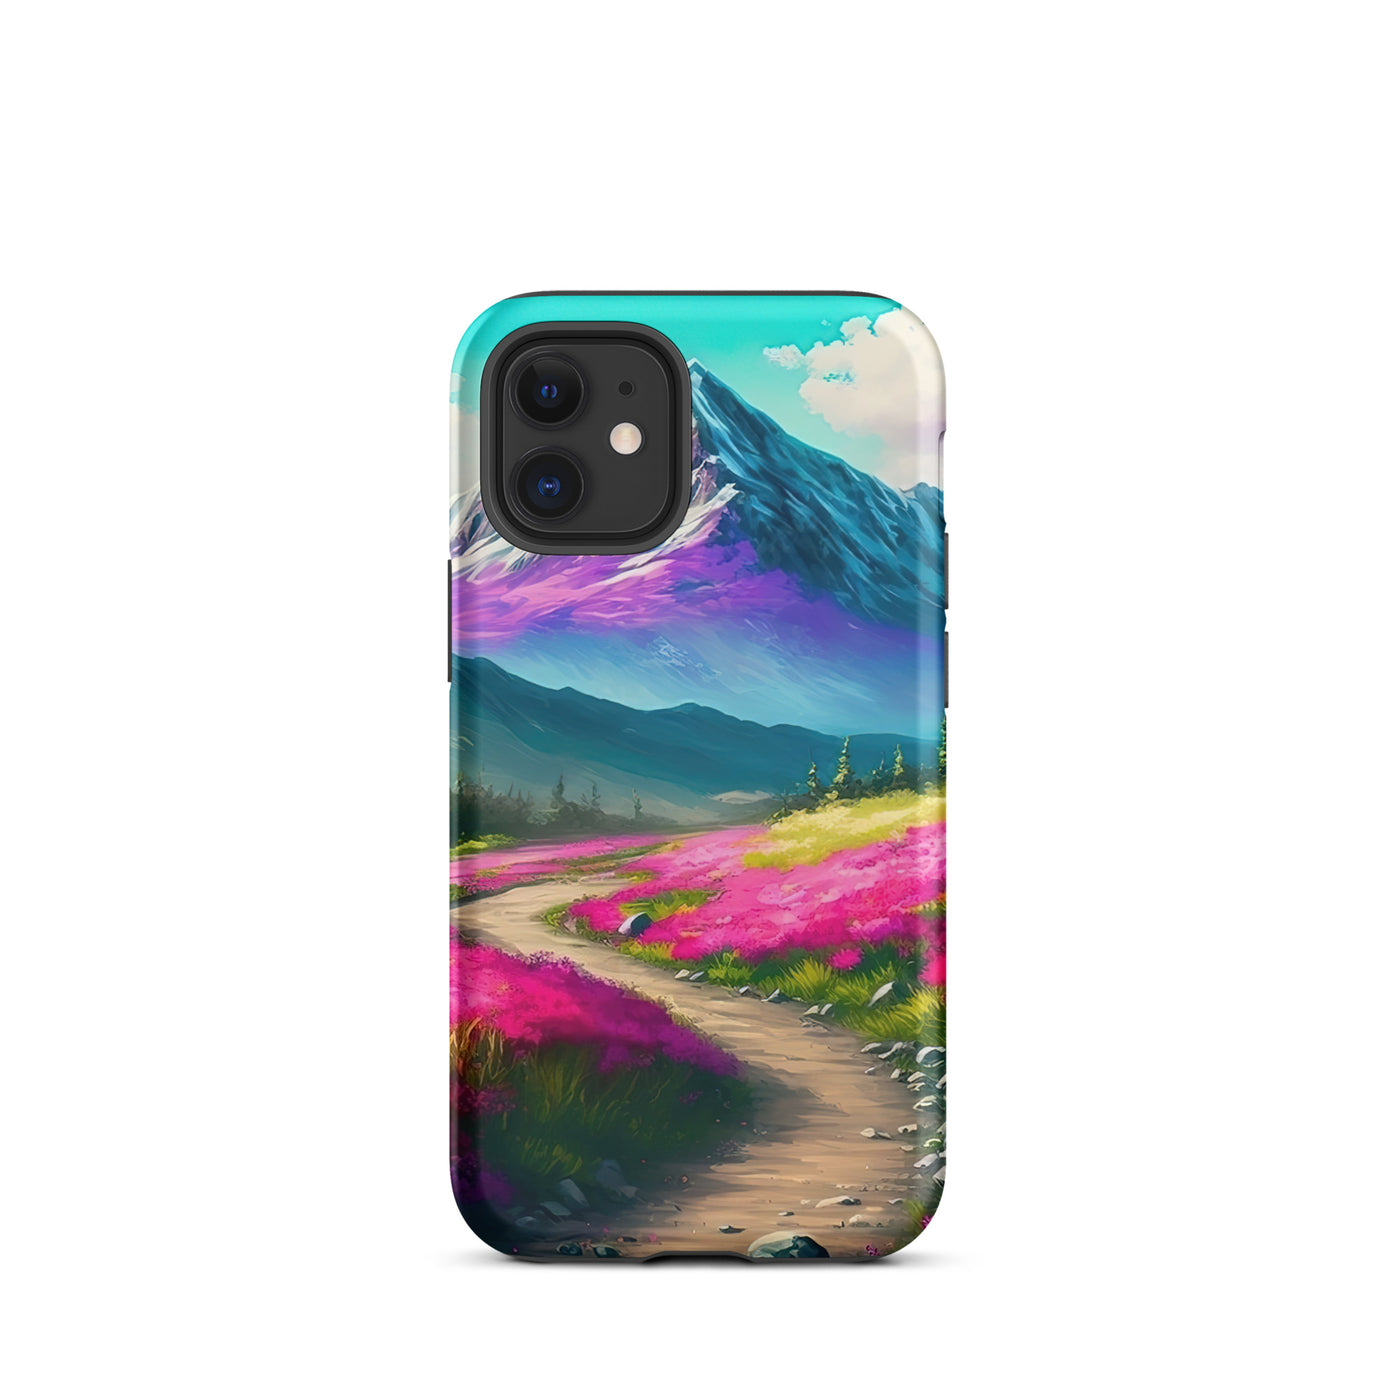 Berg, pinke Blumen und Wanderweg - Landschaftsmalerei - iPhone Schutzhülle (robust) berge xxx iPhone 12 mini